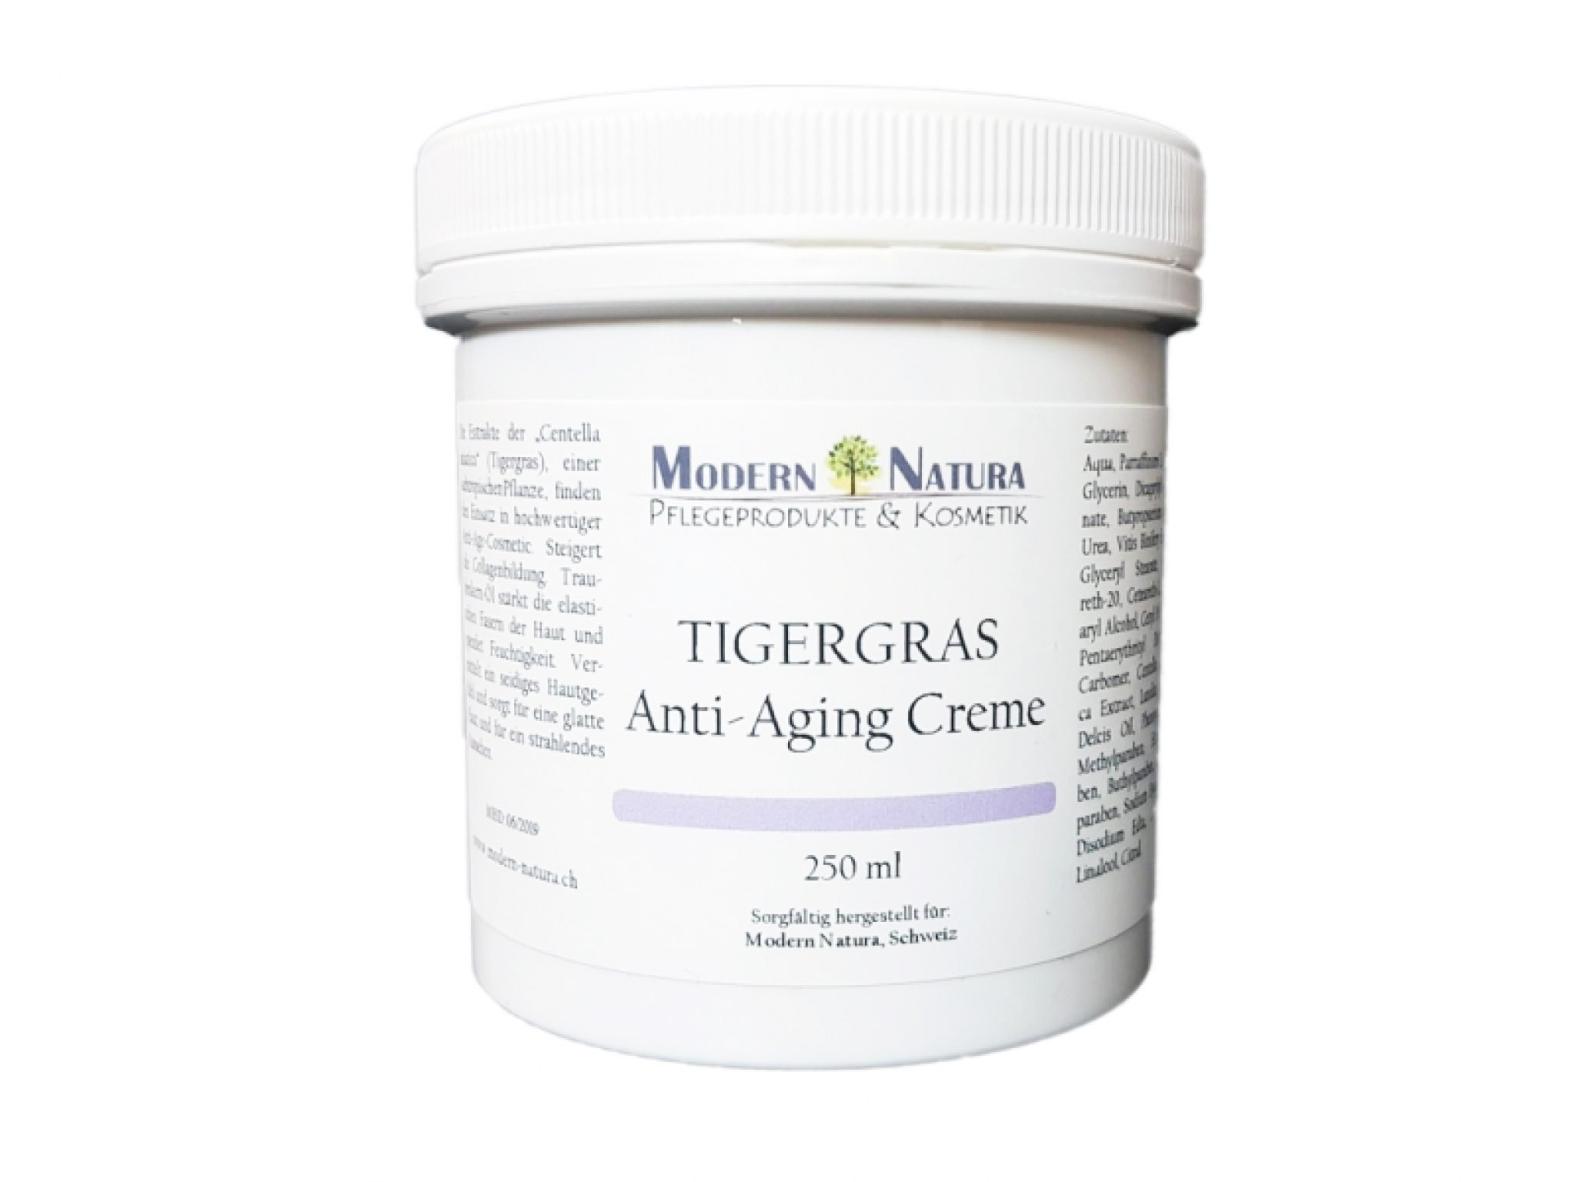 Tigergras Anti-Aging Creme (250ml)